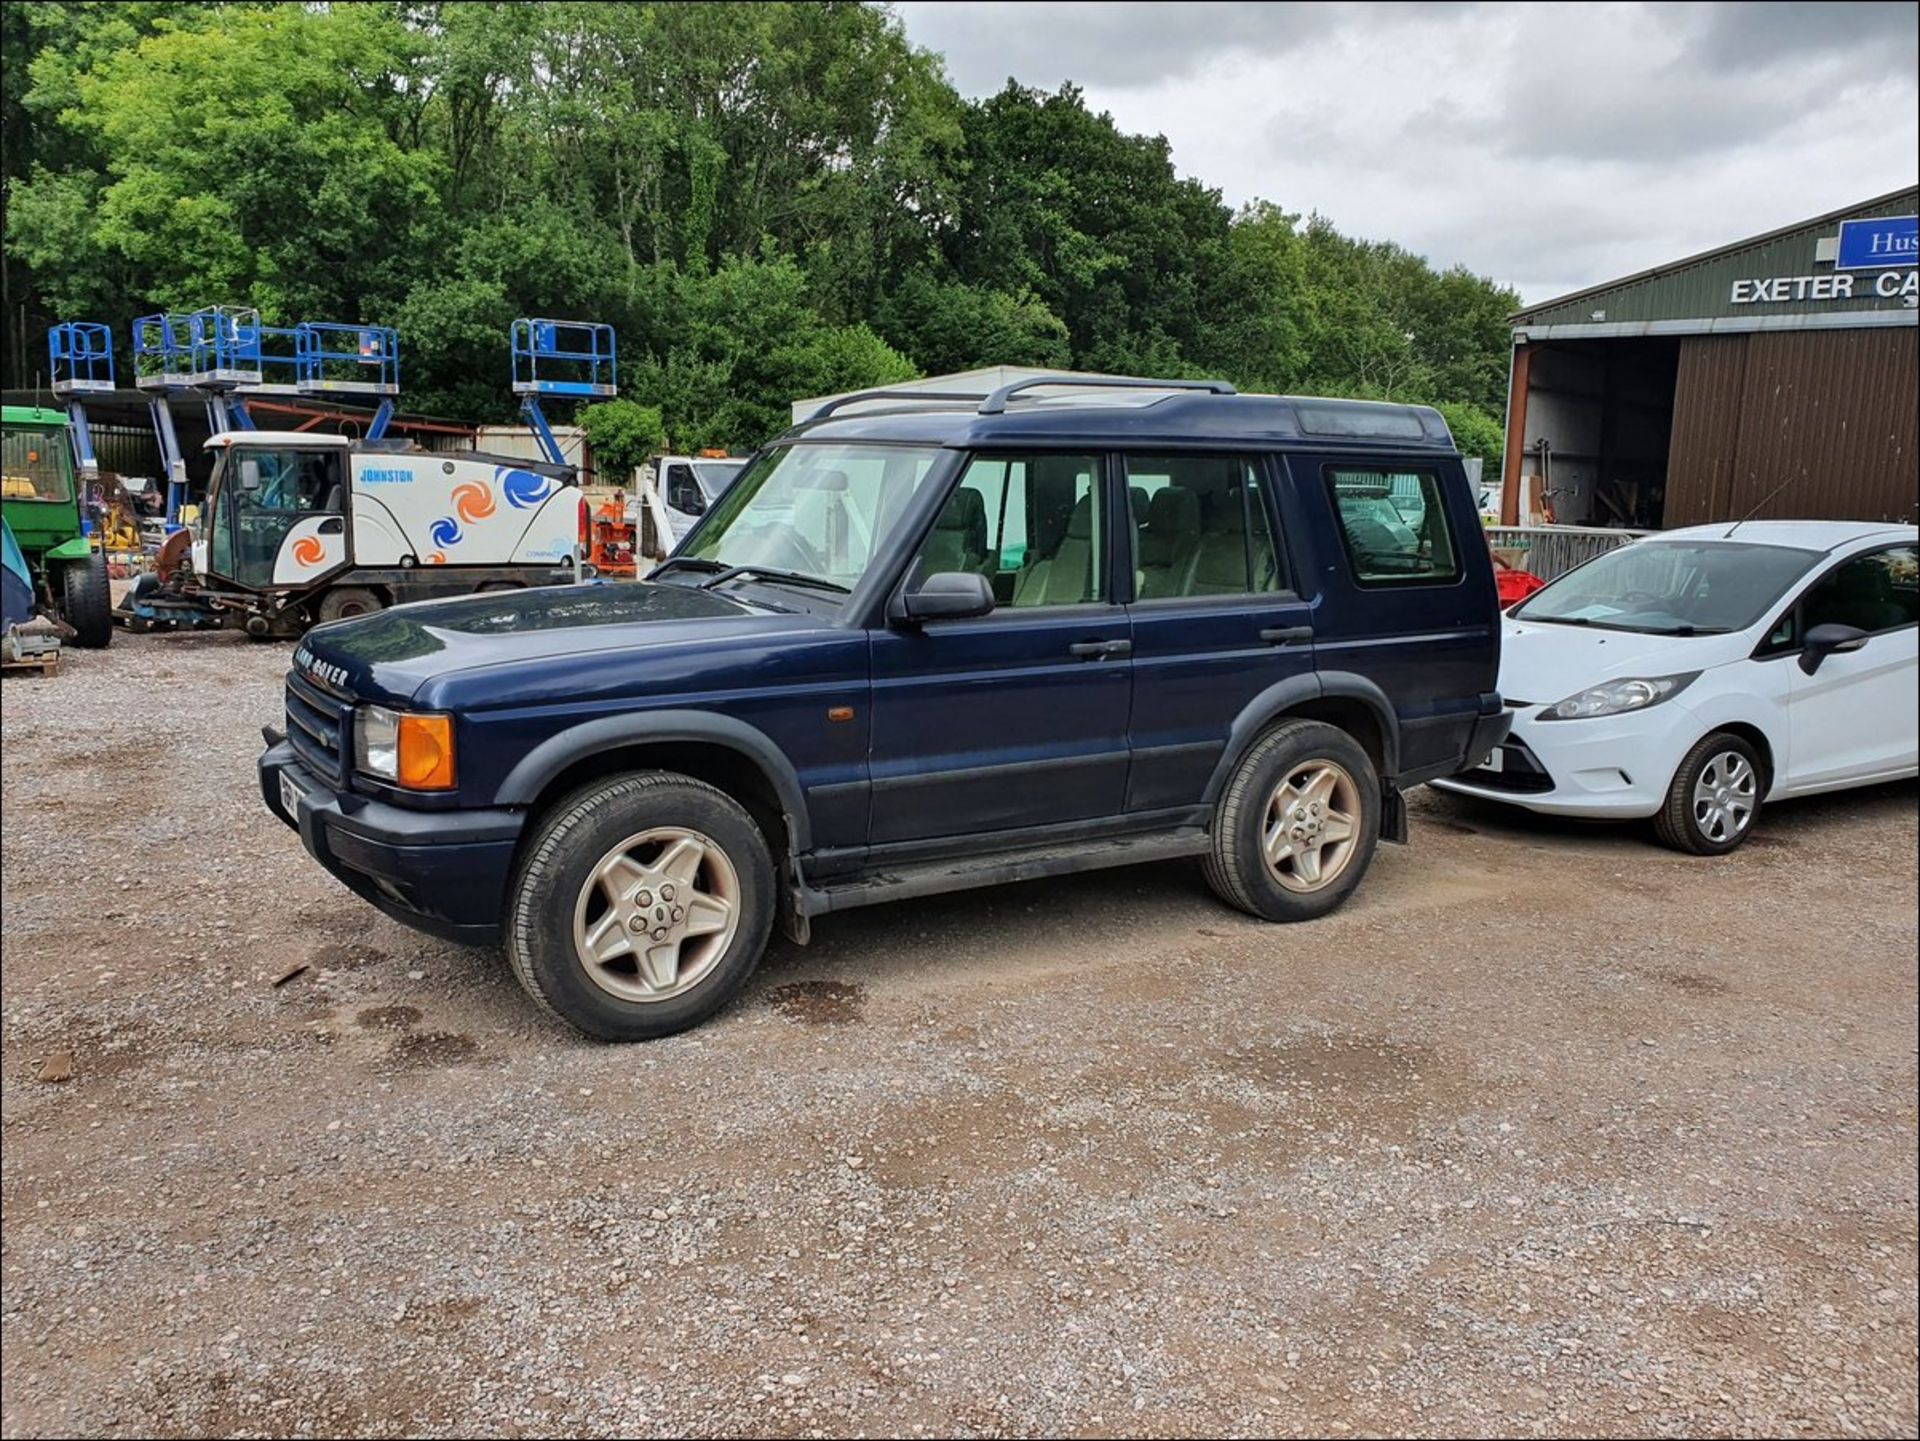 01/Y Land Rover Discovery TD5 ES - 2495cc 5dr Estate (Blue, 143k) - Image 5 of 11